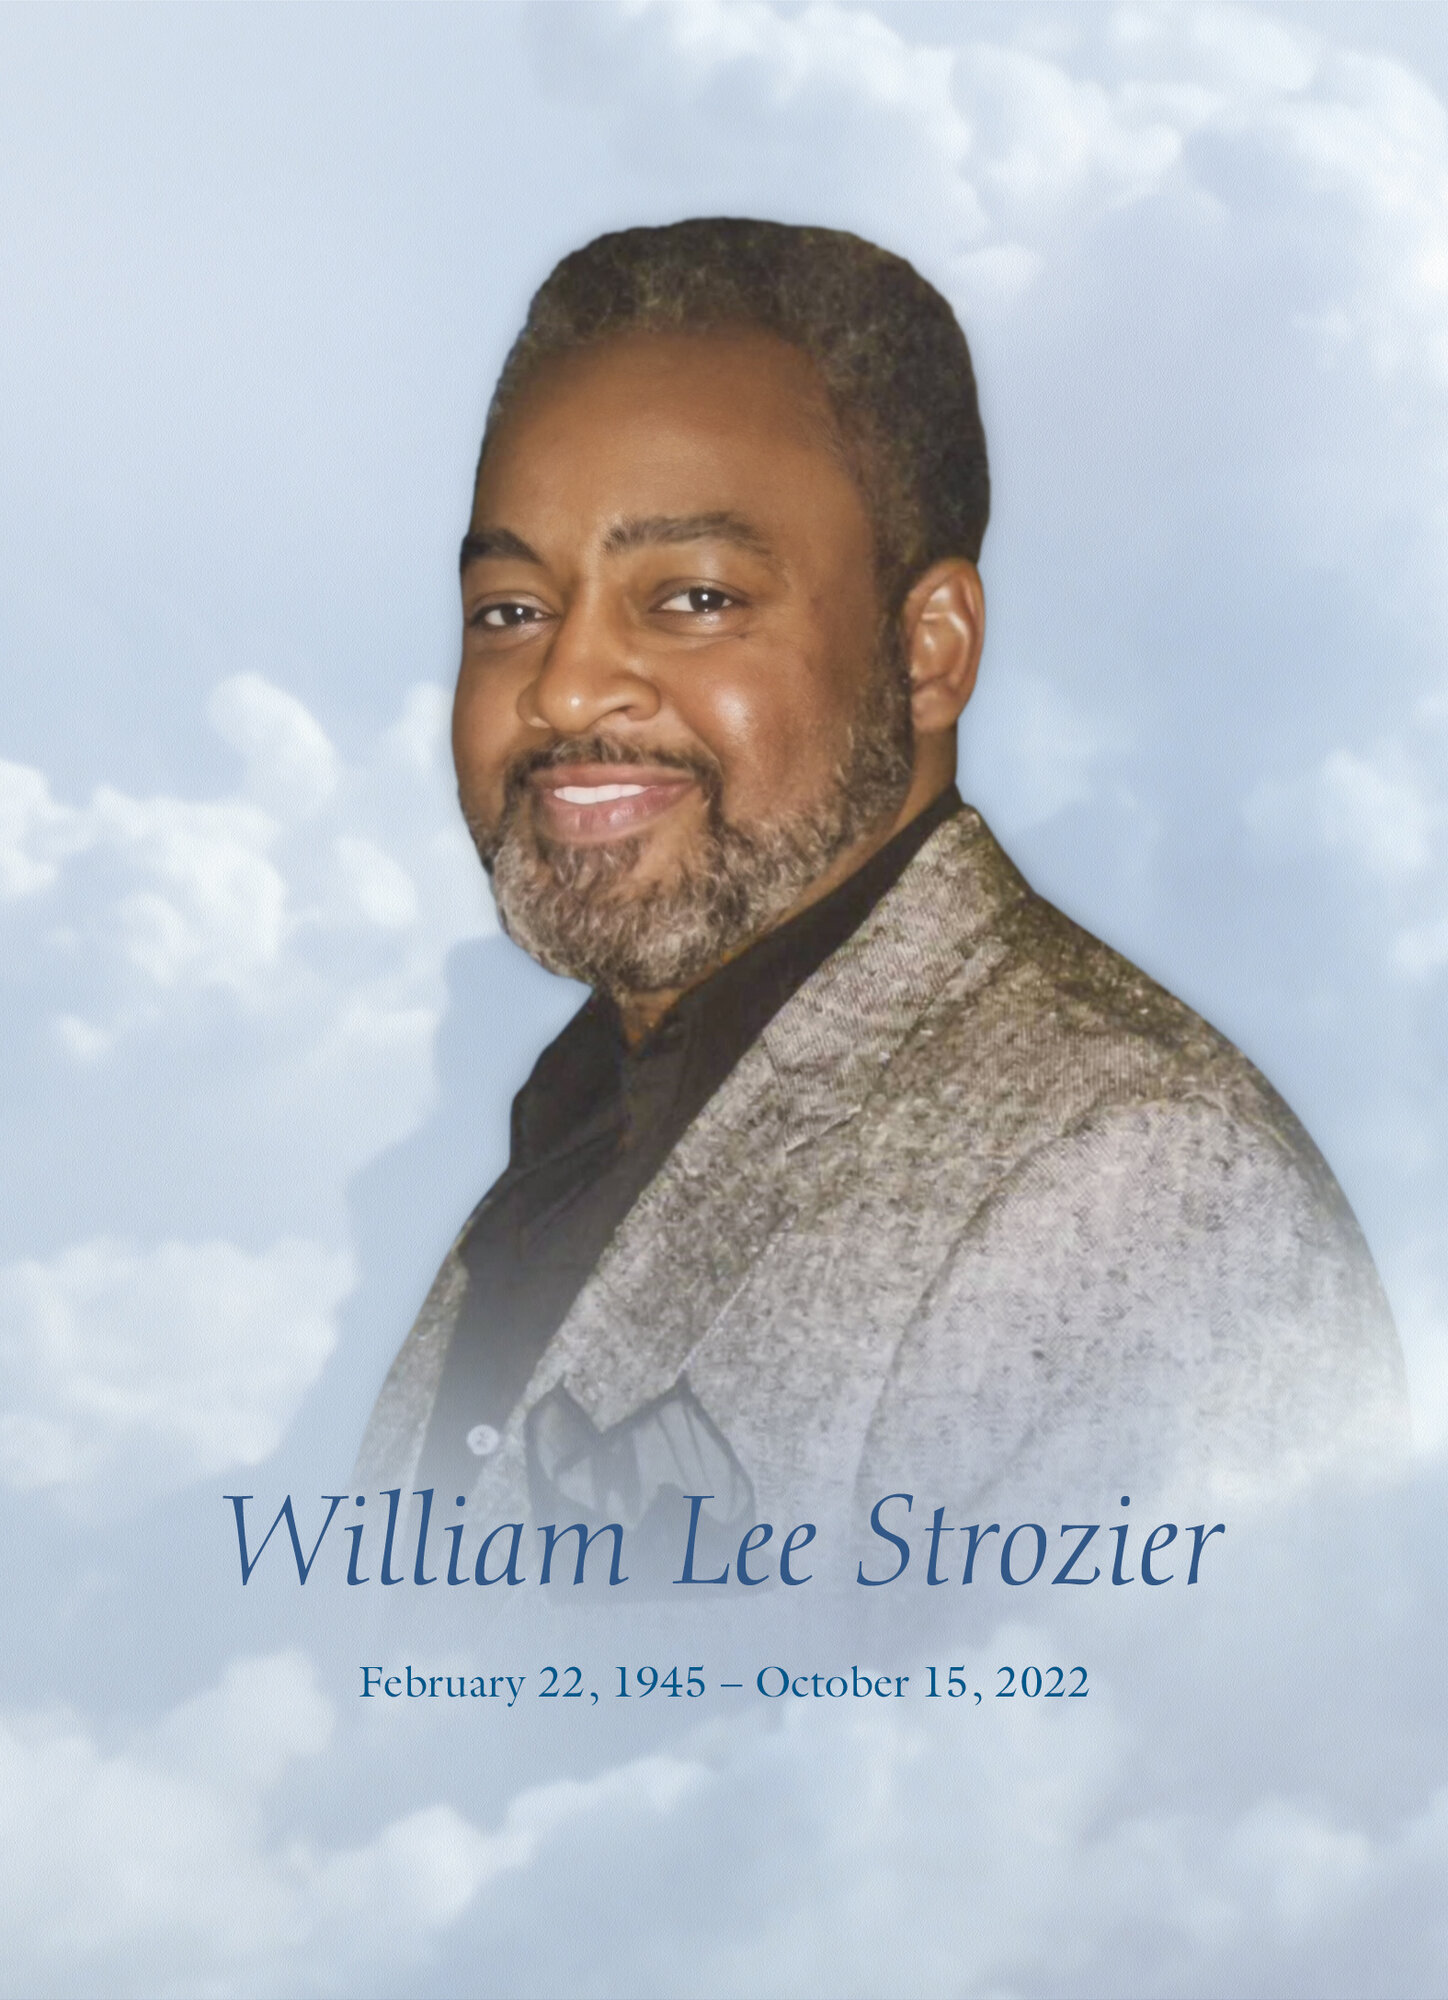 William Lee Strozier